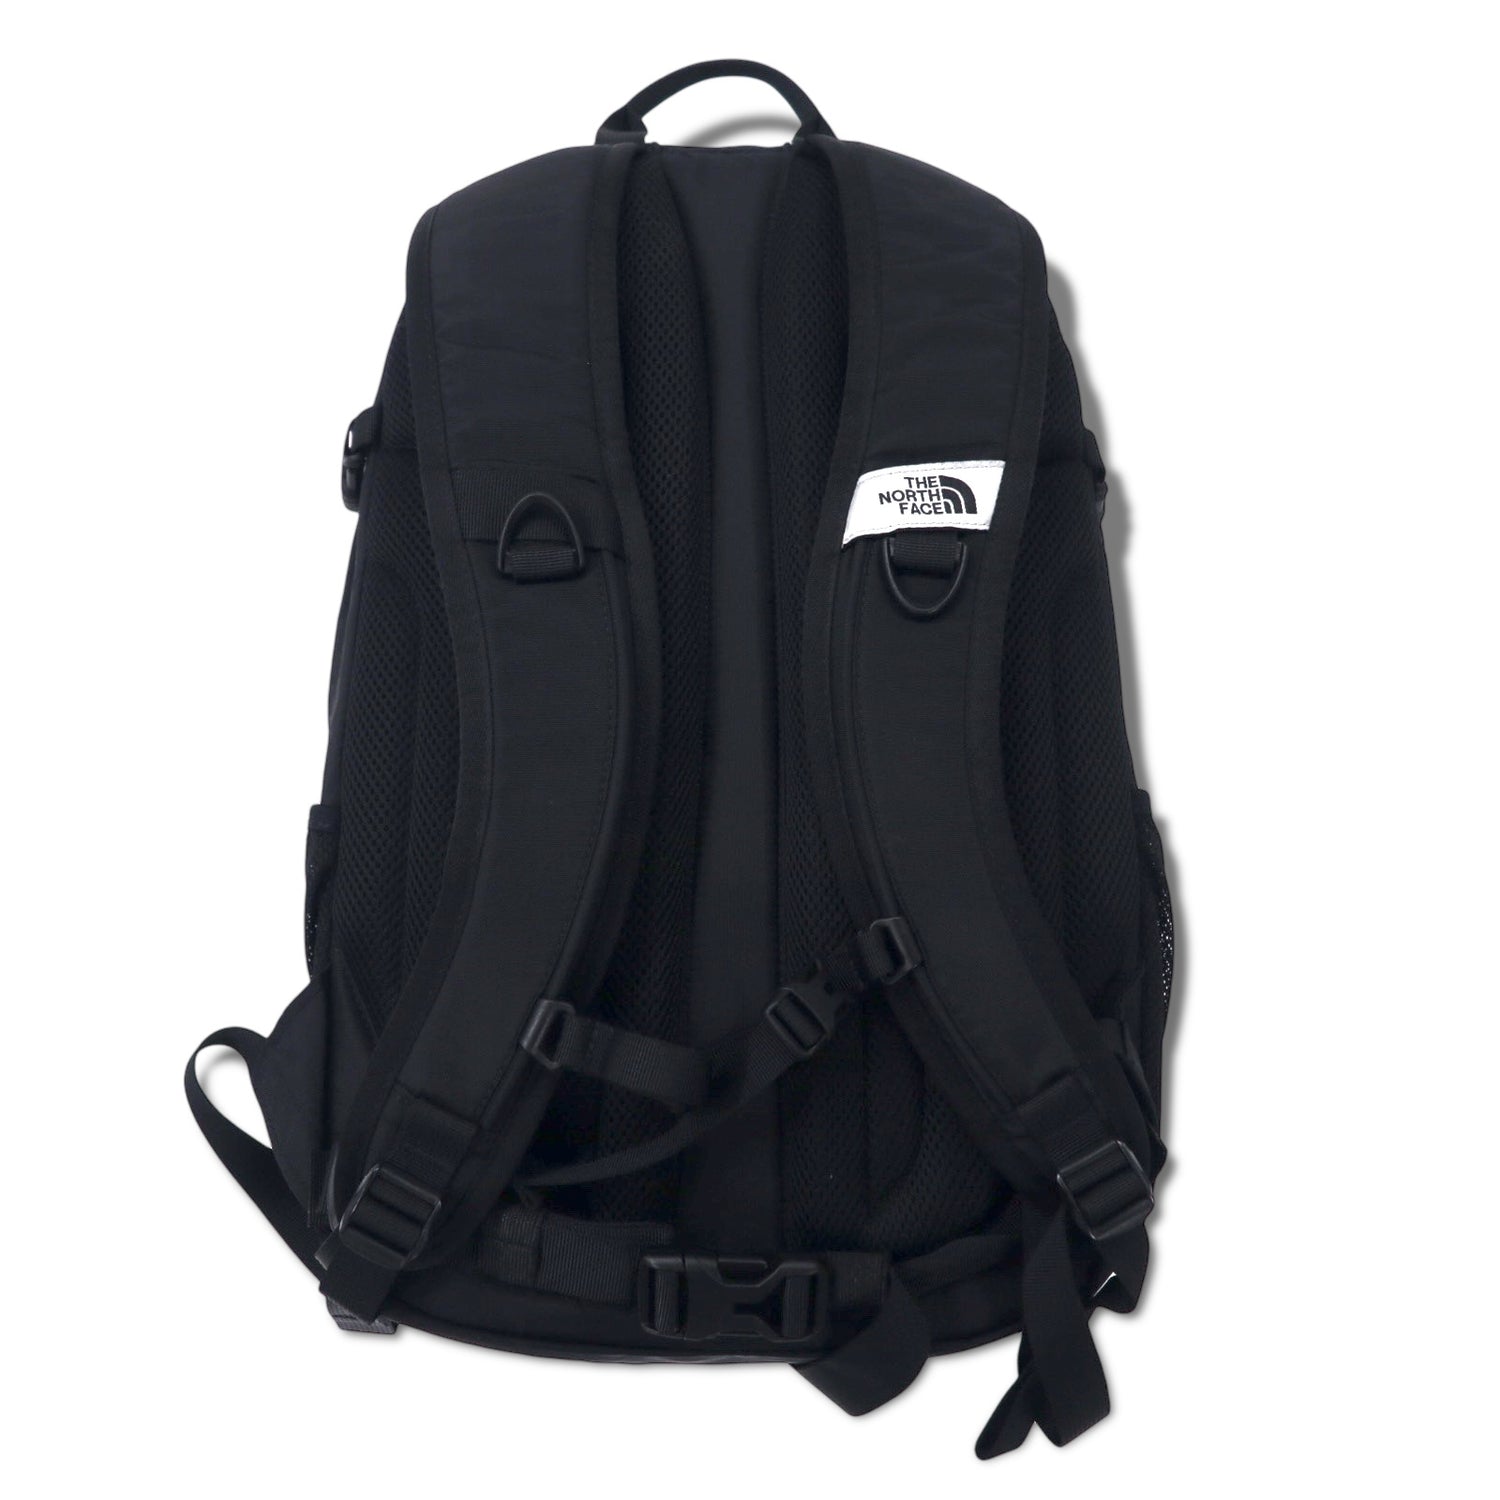 THE NORTH FACE Single Shot Backpack Rucksack 23L Black Nylon Logo 